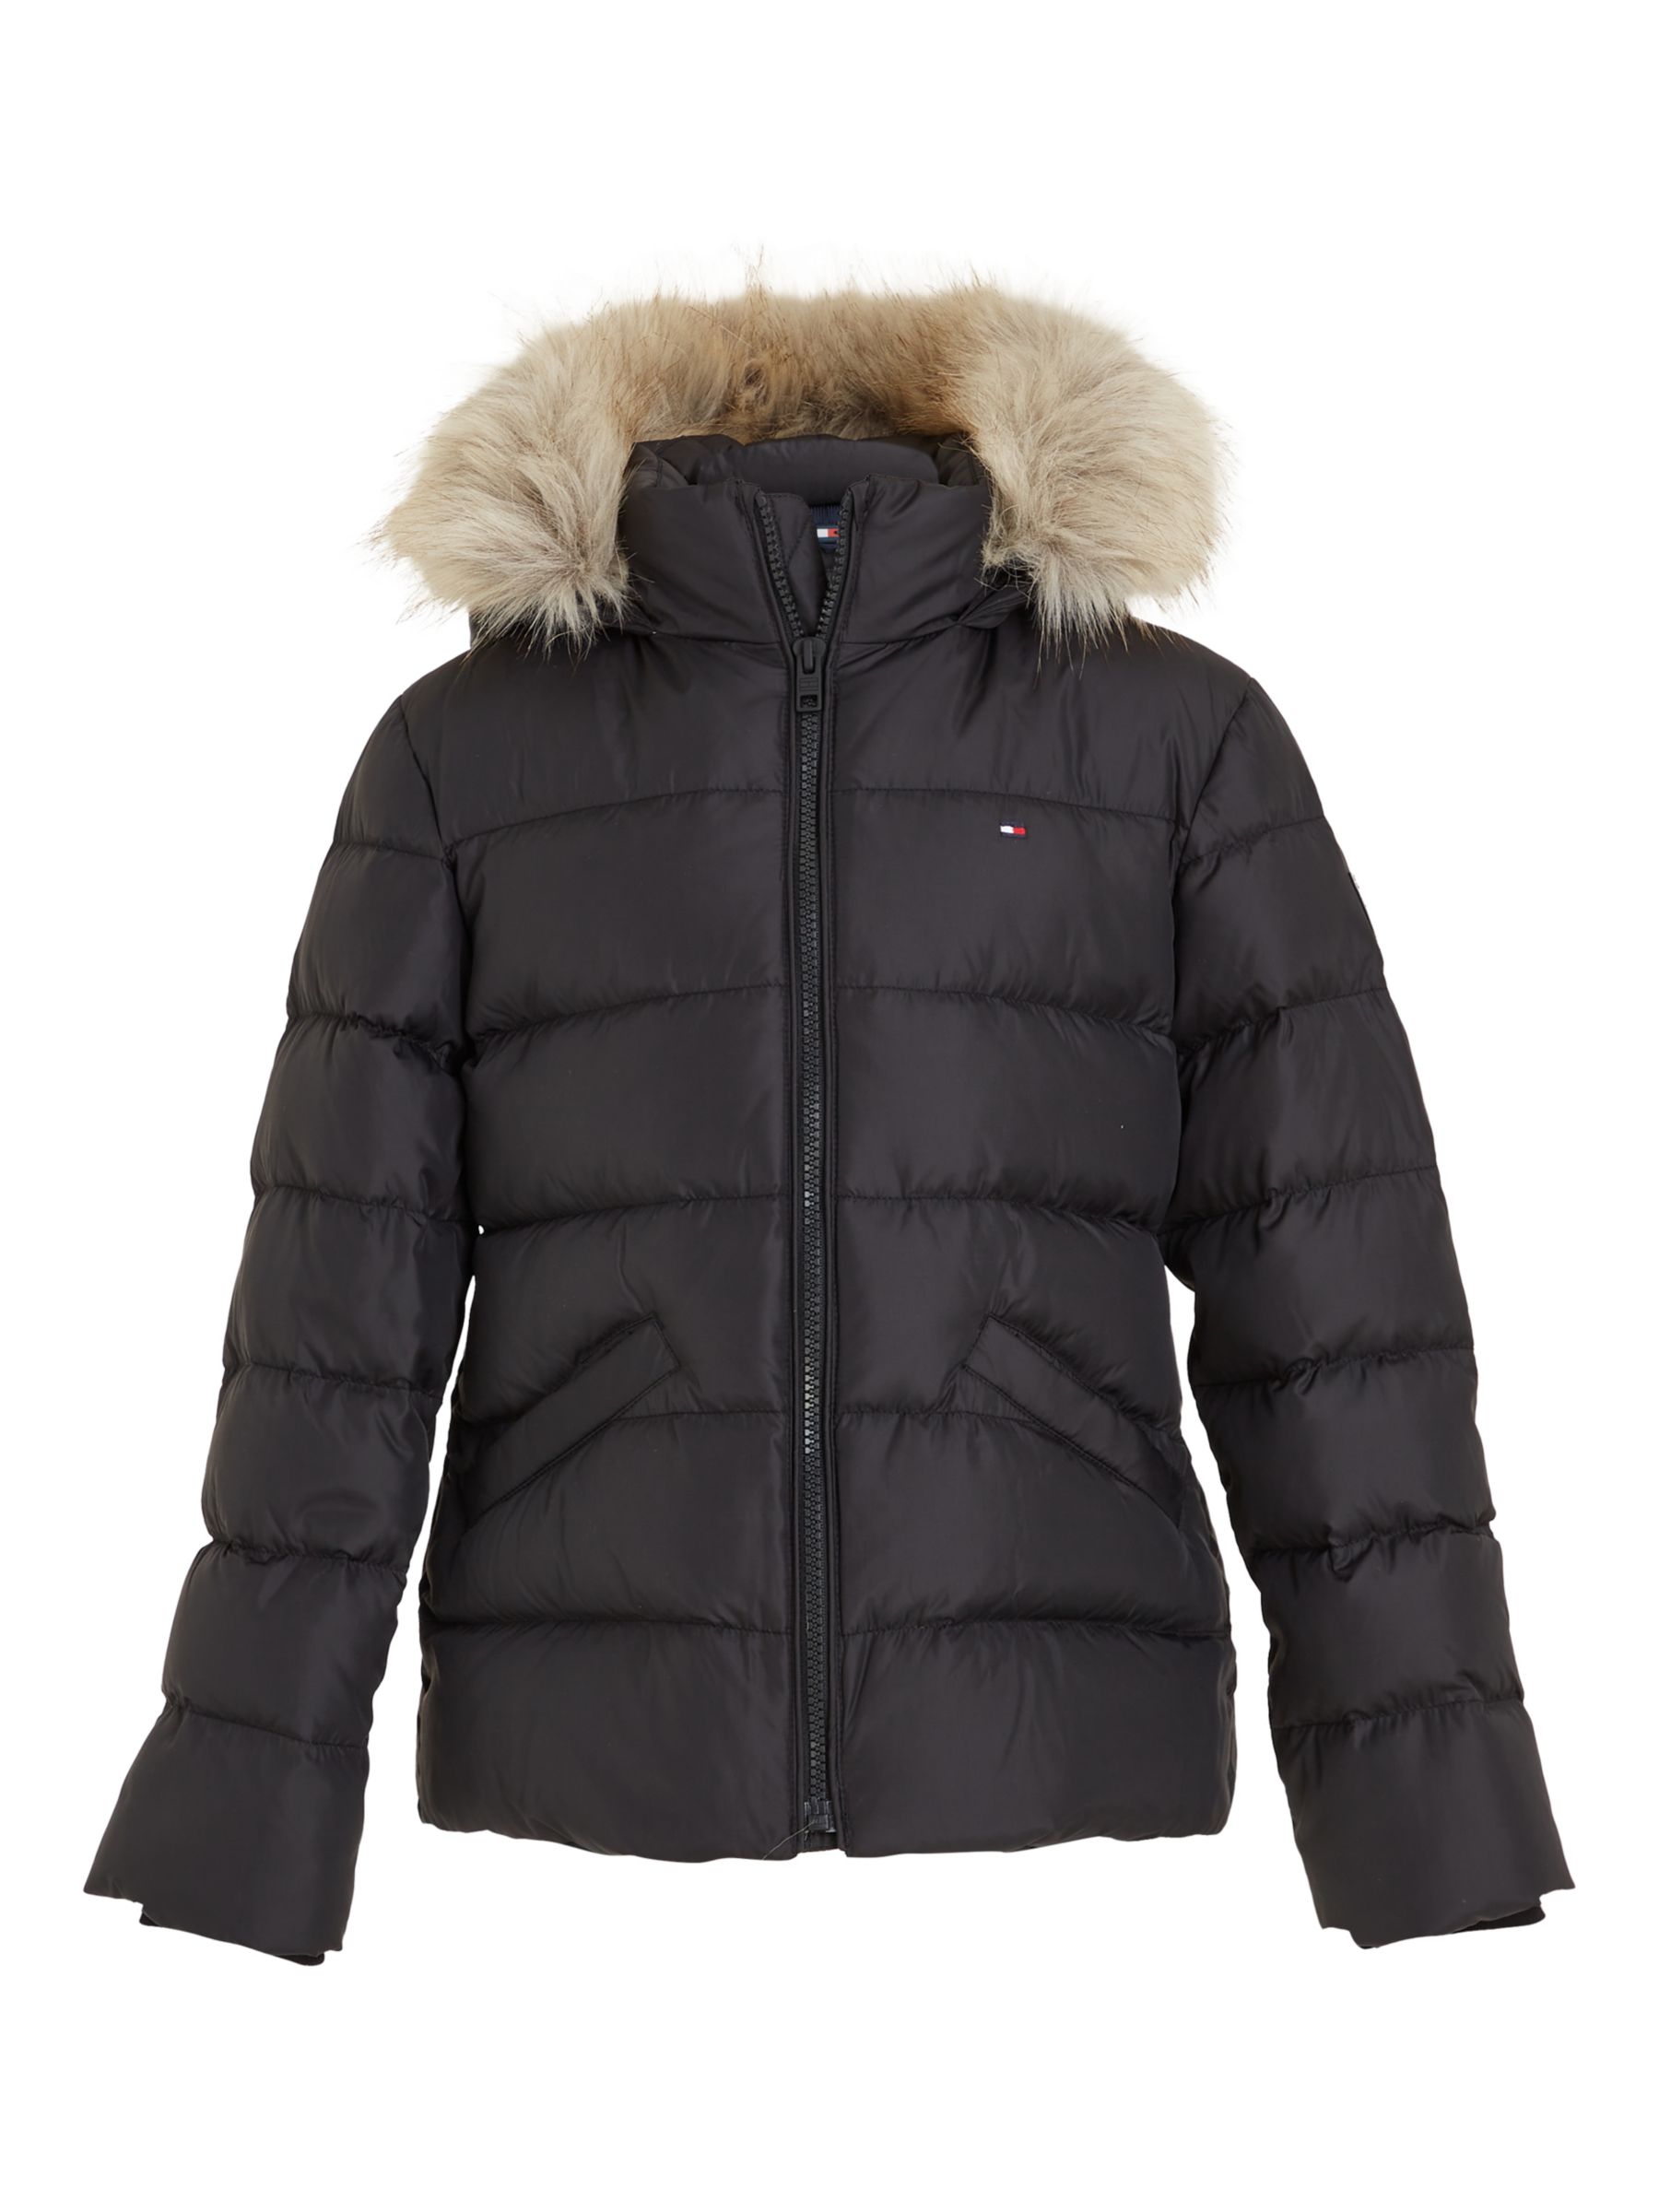 Tommy Hilfiger Kids' Fur Hood Puffer Jacket, Black at John Lewis & Partners